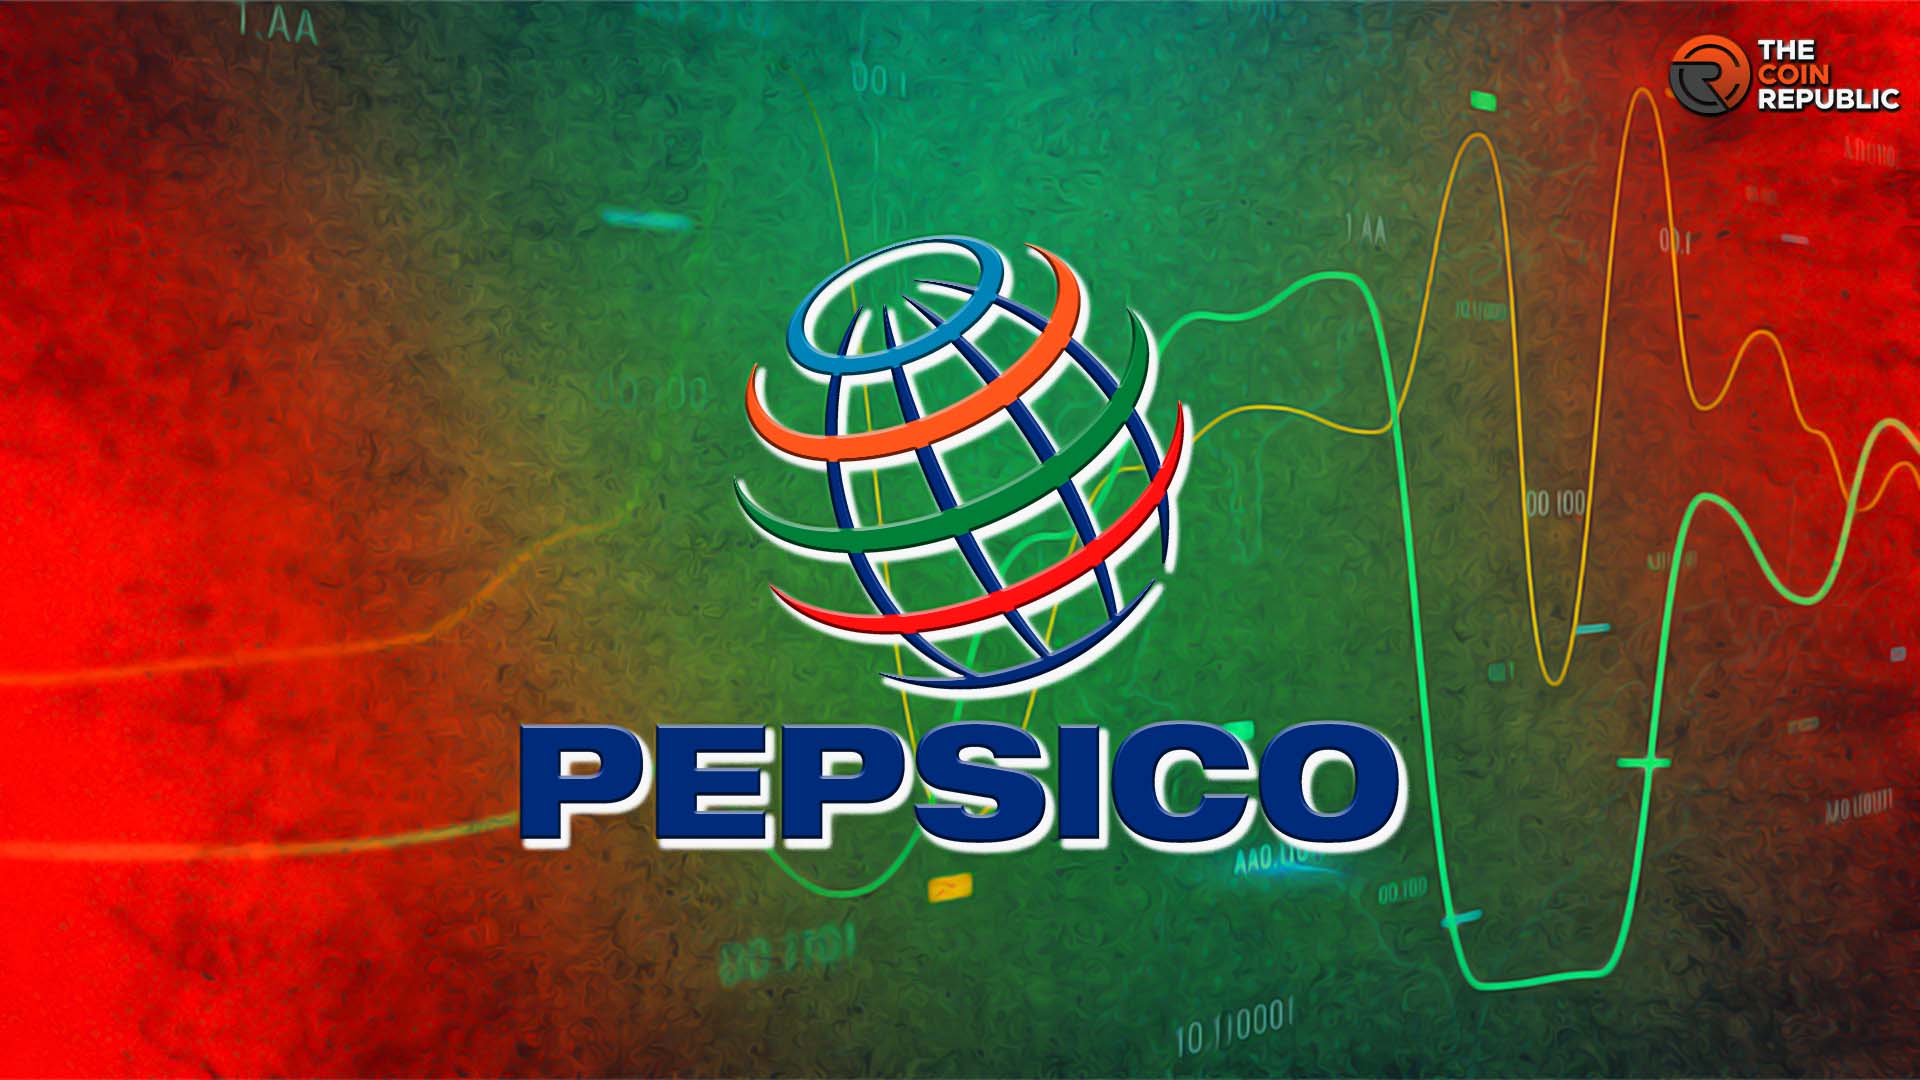 PepsiCo Inc. (PEP Stock) – Earnings Report Beats Expectations